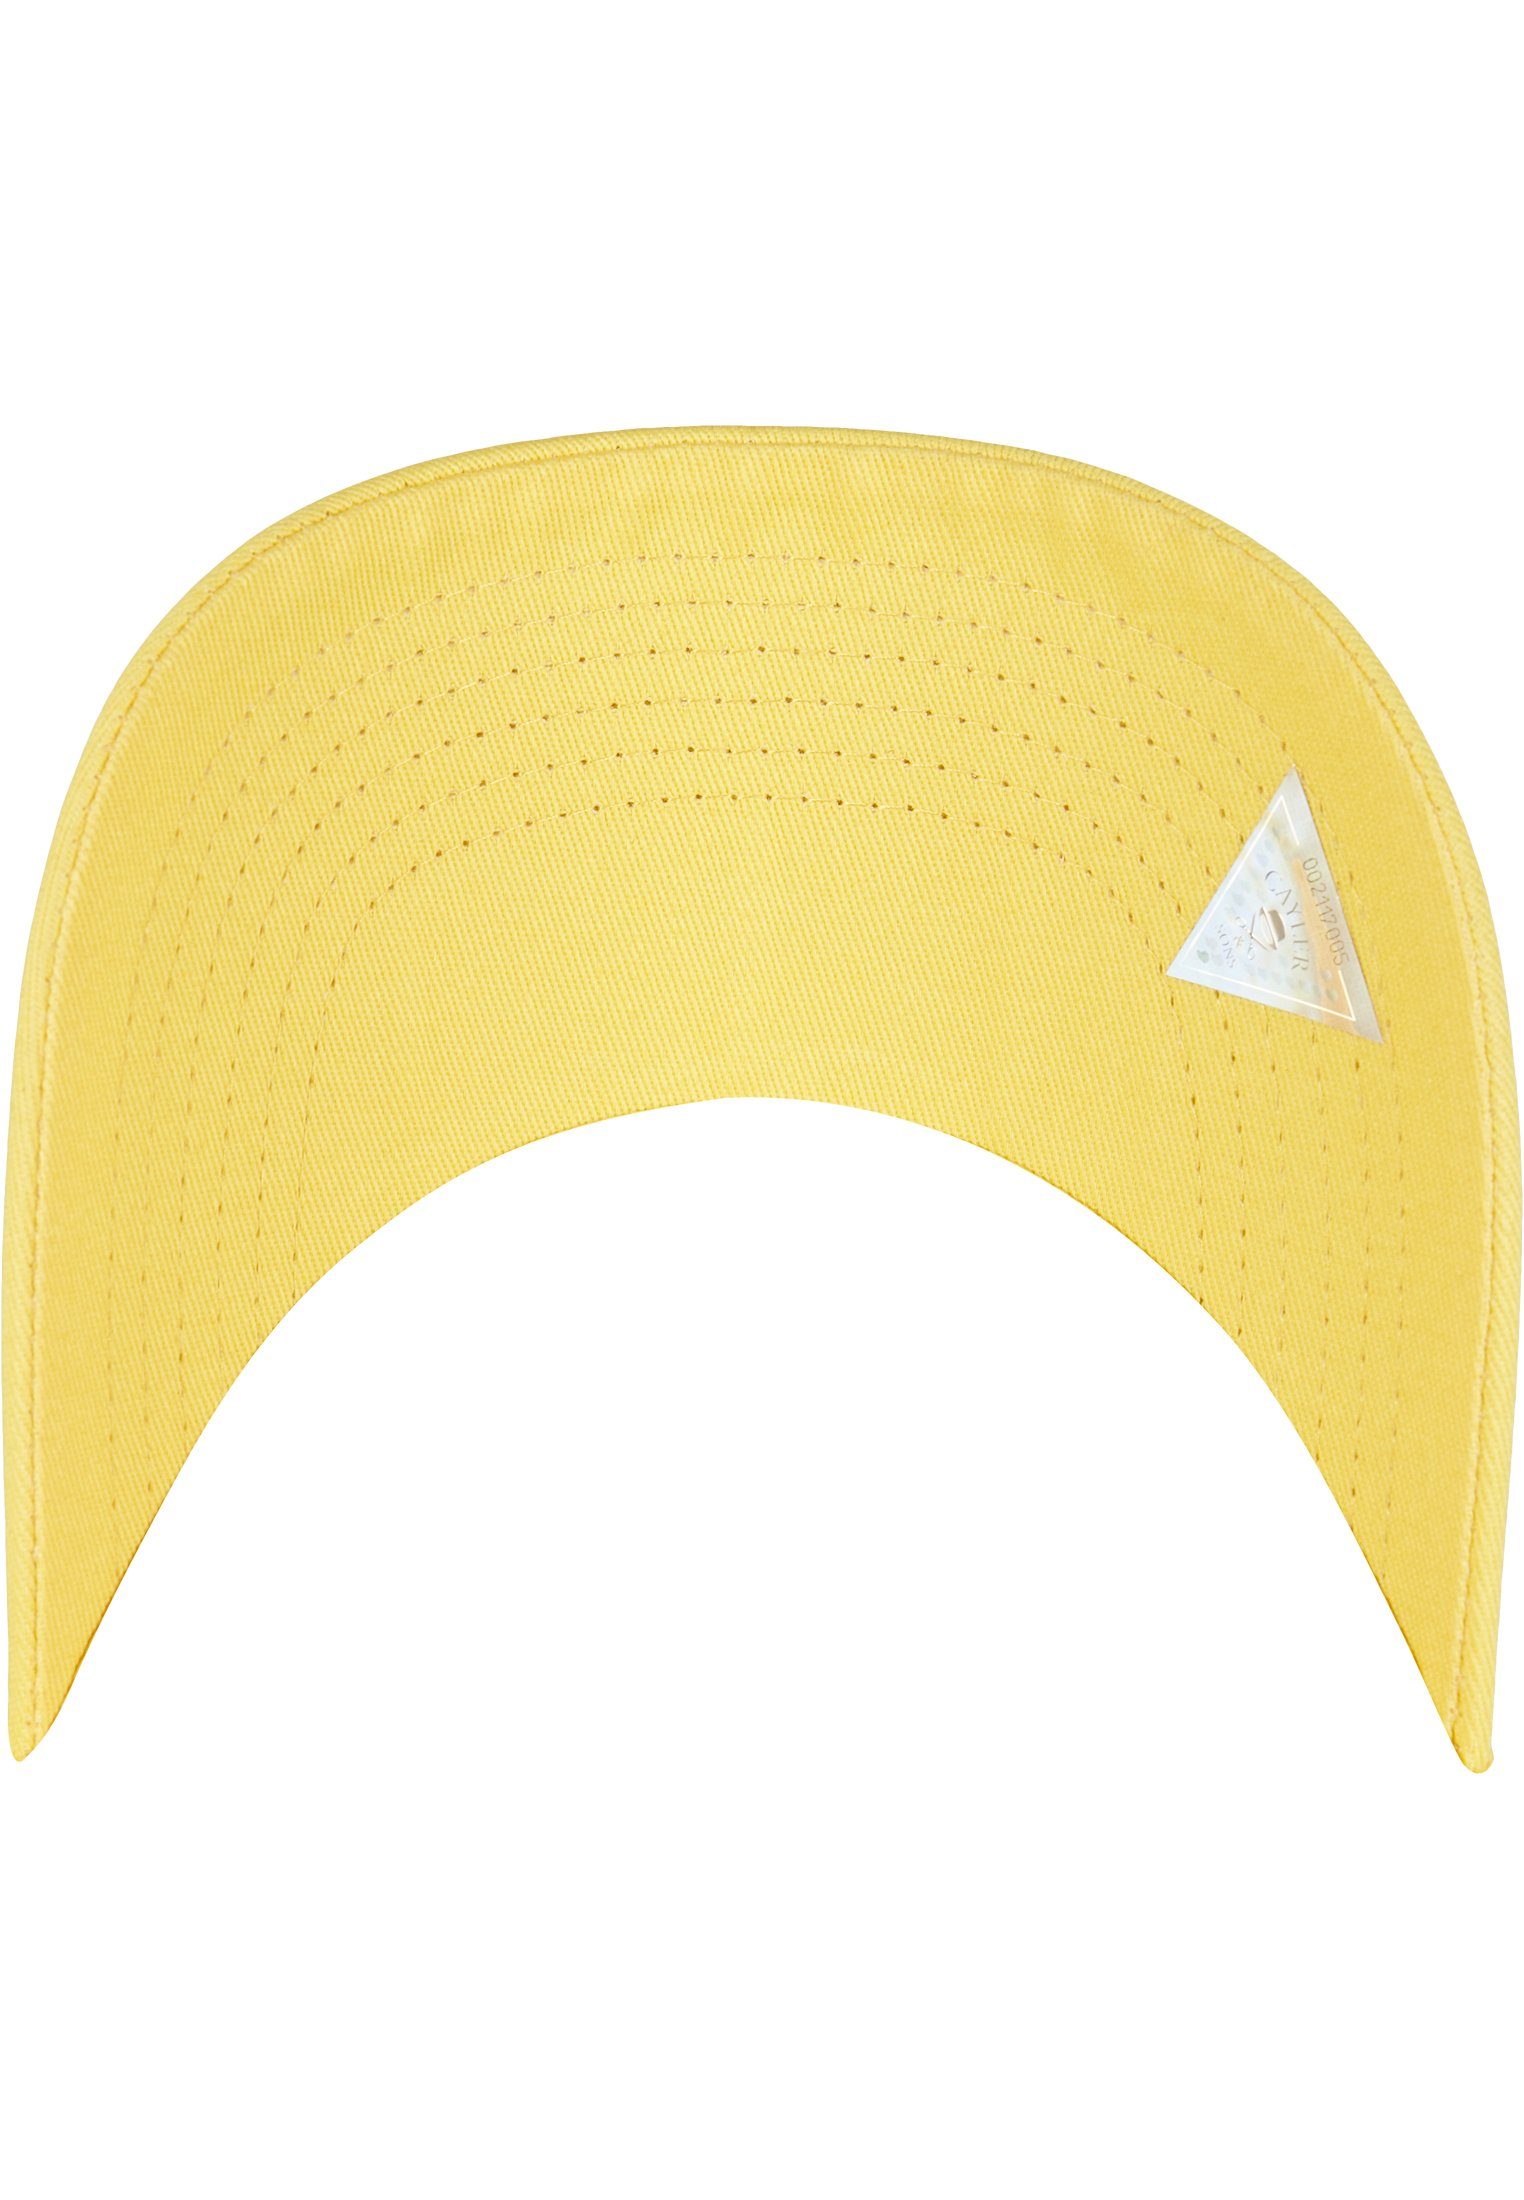 C&S yellow/multicolor Iconic Peace Cap & Curved CAYLER SONS Flex Cap